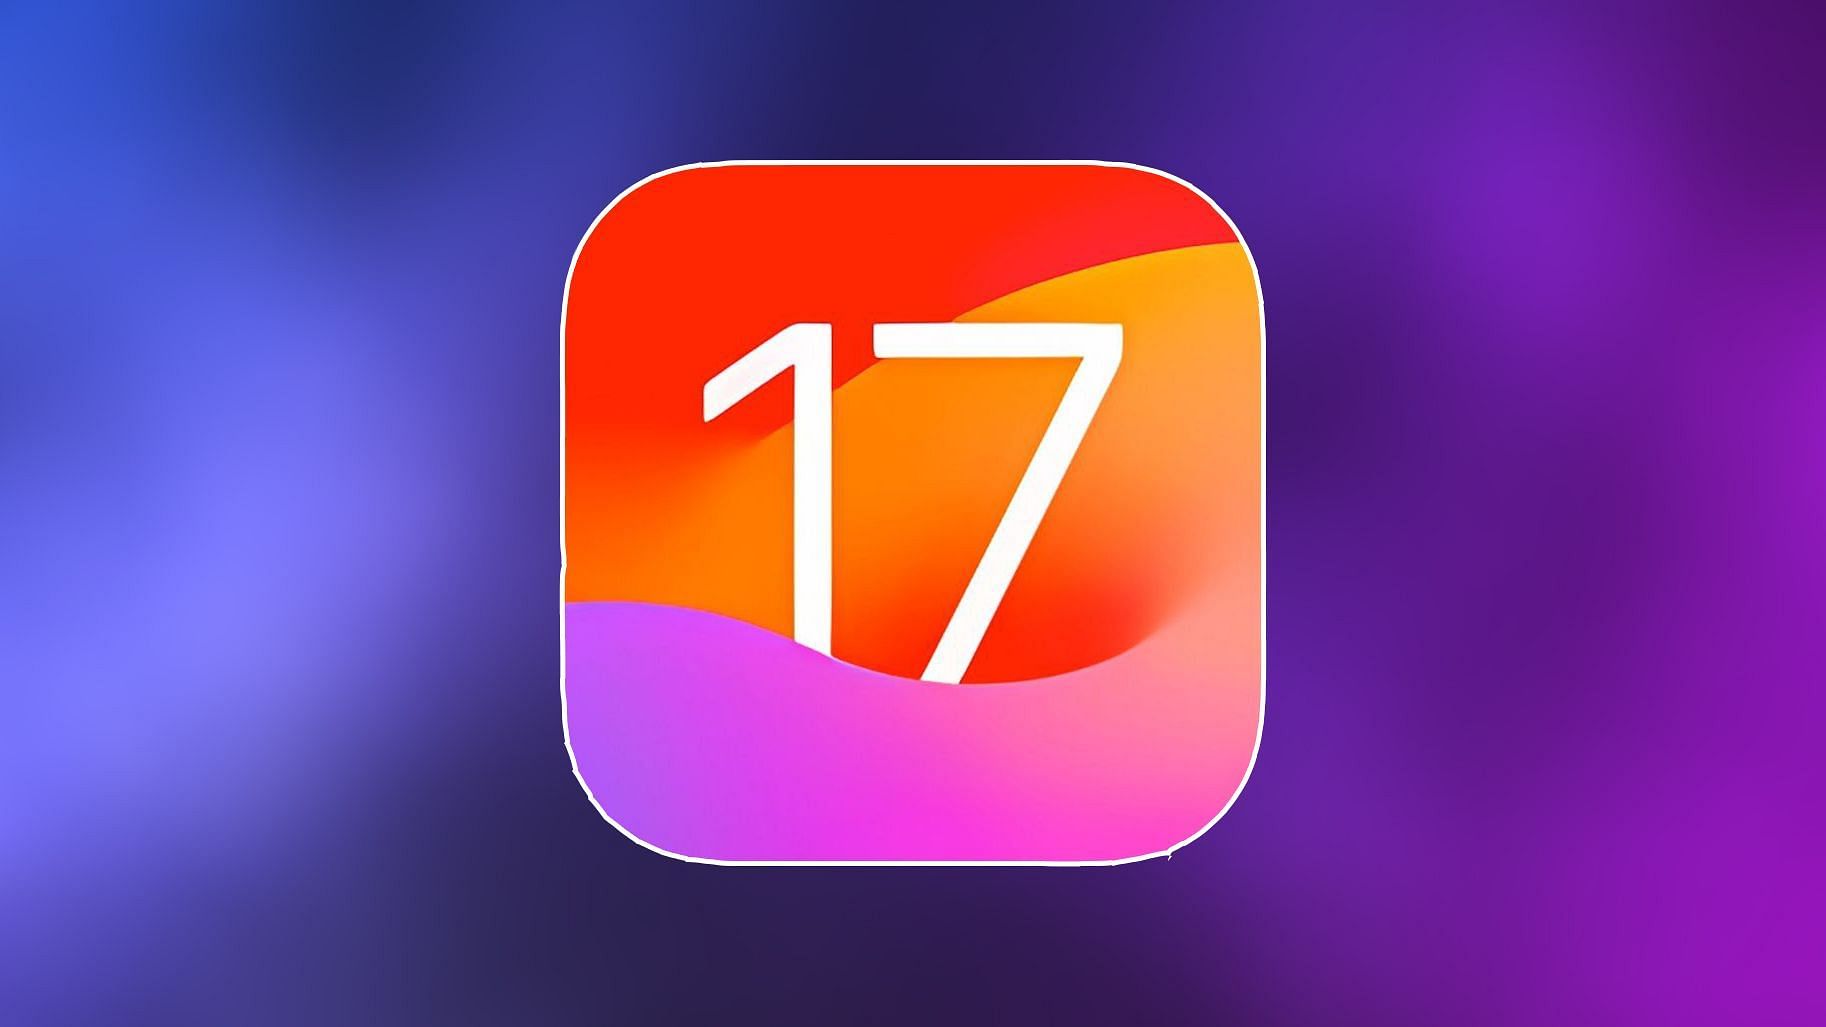 Apple has finally released the iOS 17 (Image via Sportskeeda)